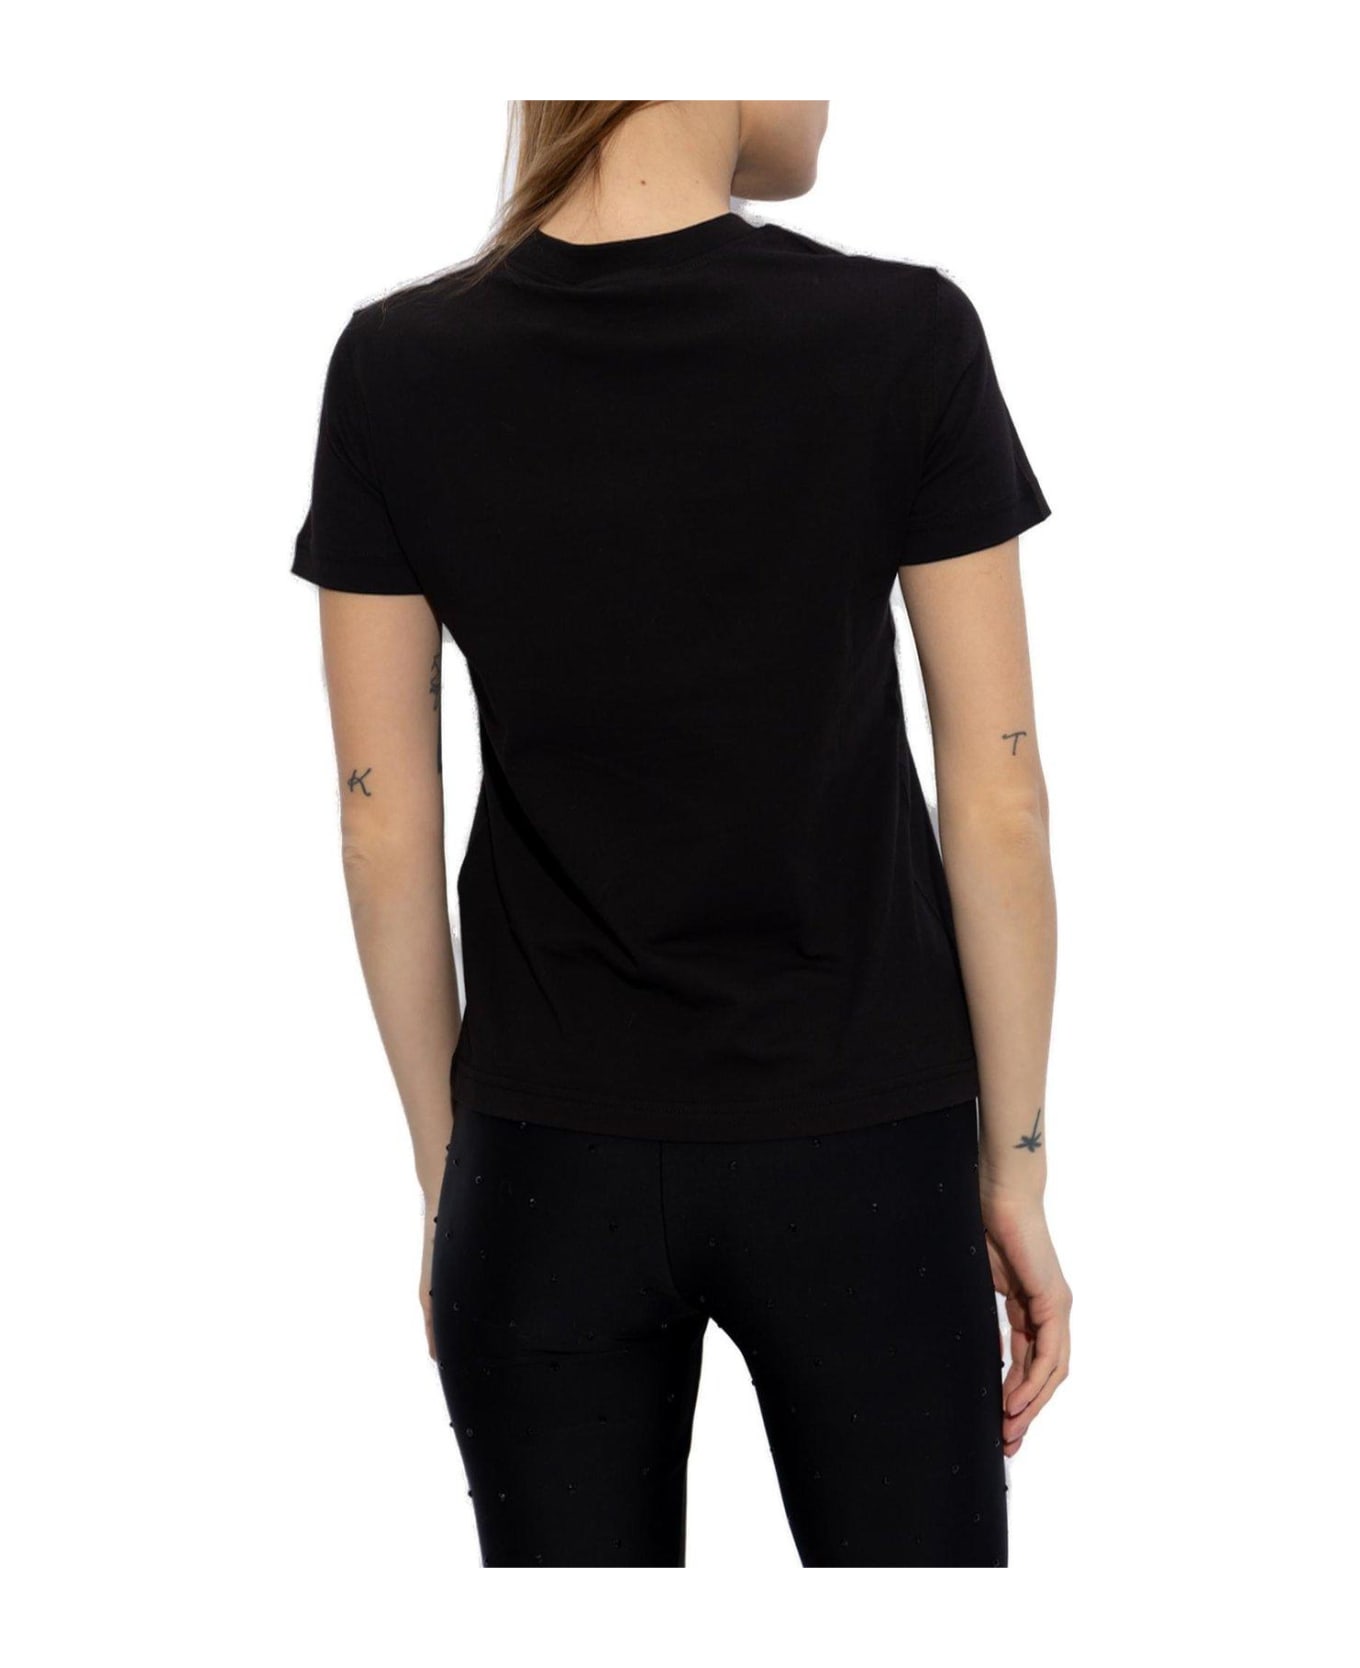 Versace Jeans Couture Logo Printed Crewneck T-shirt - Black/gold Tシャツ